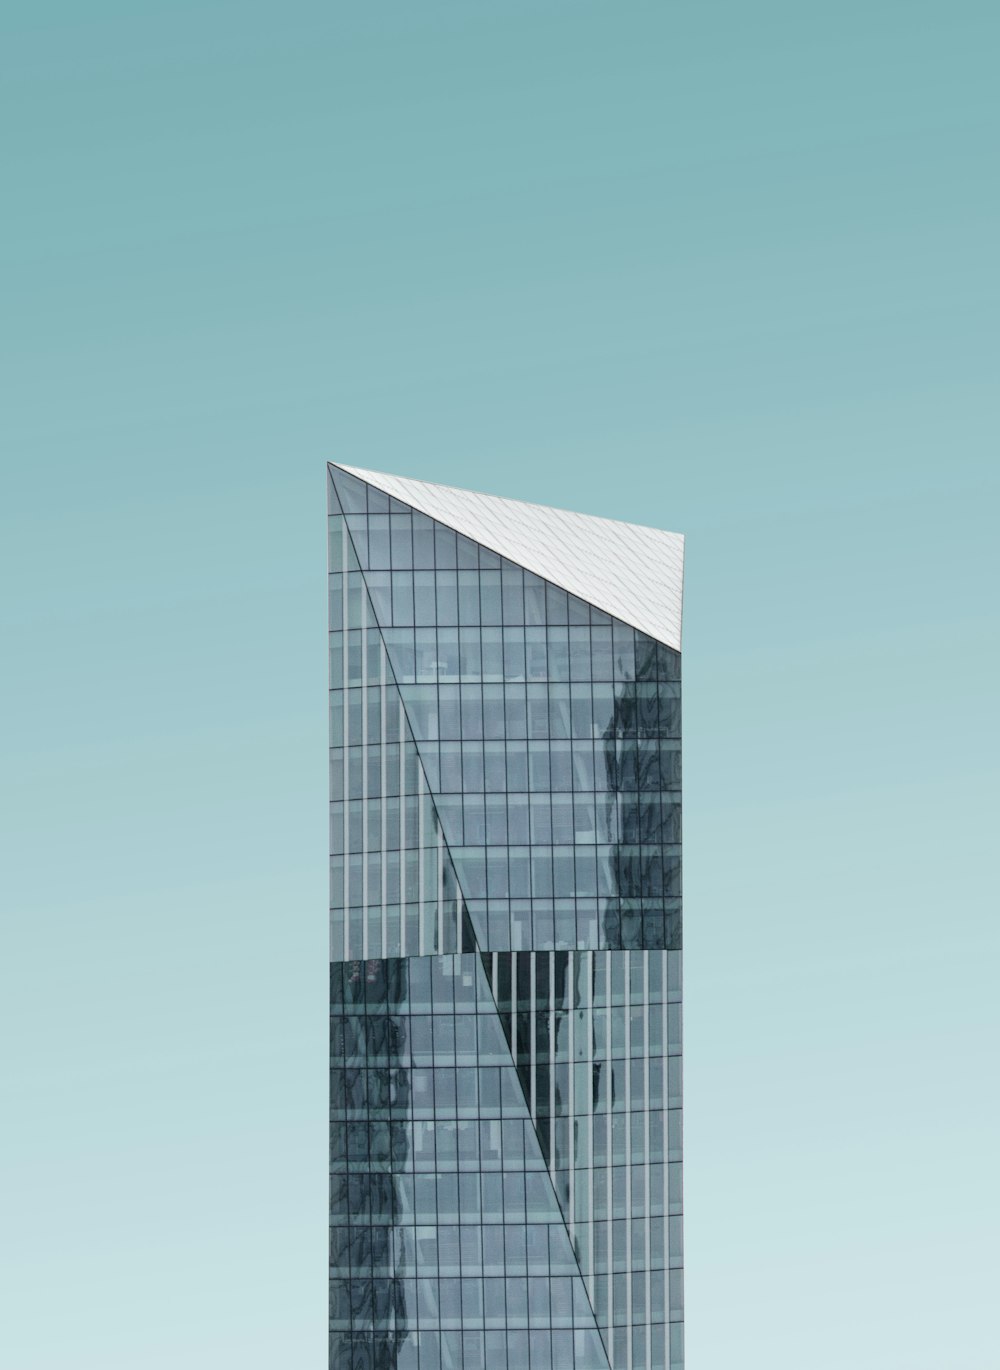 Immeuble de verre de grande hauteur en gros plan-photo